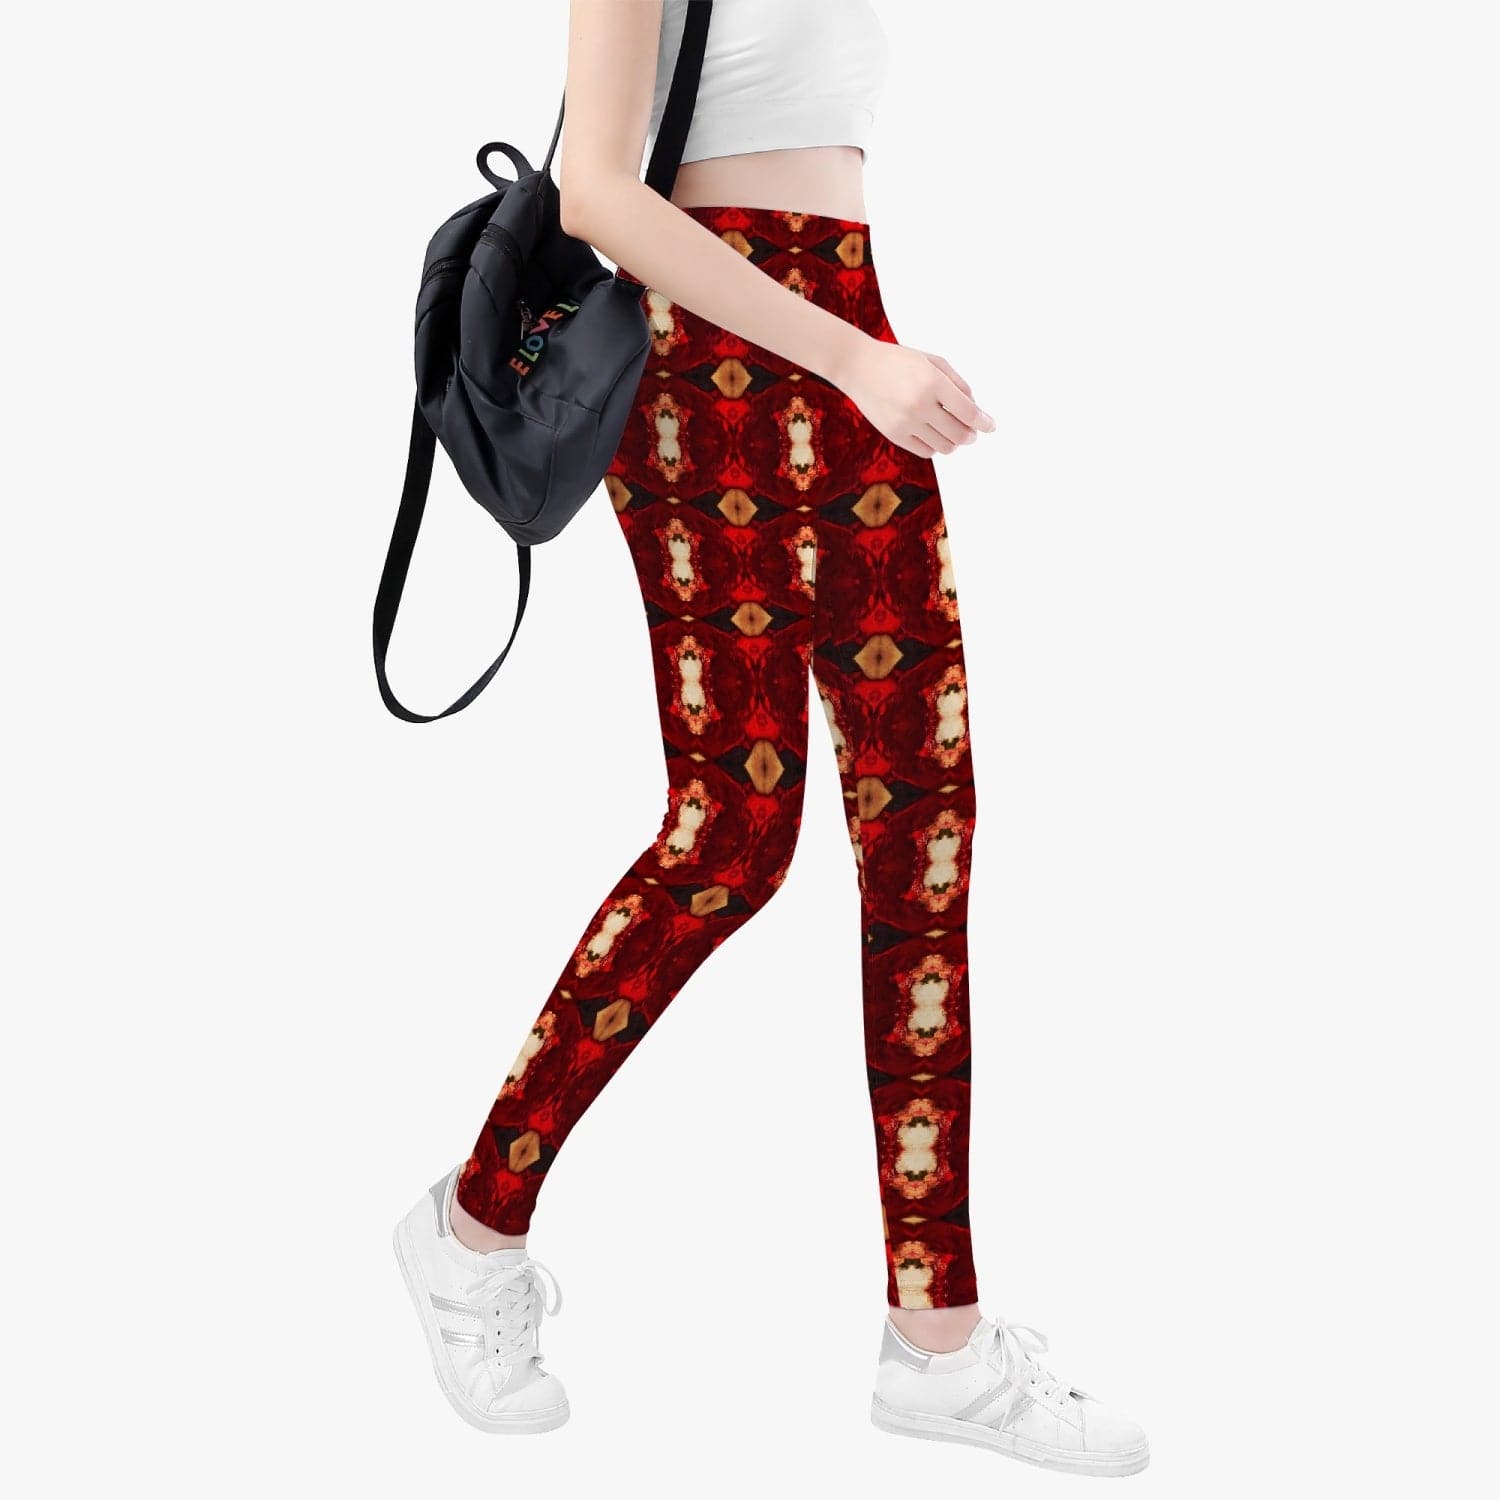 Active Red Black and White Yoga Pants/Leggings, by Sensus Studio Design